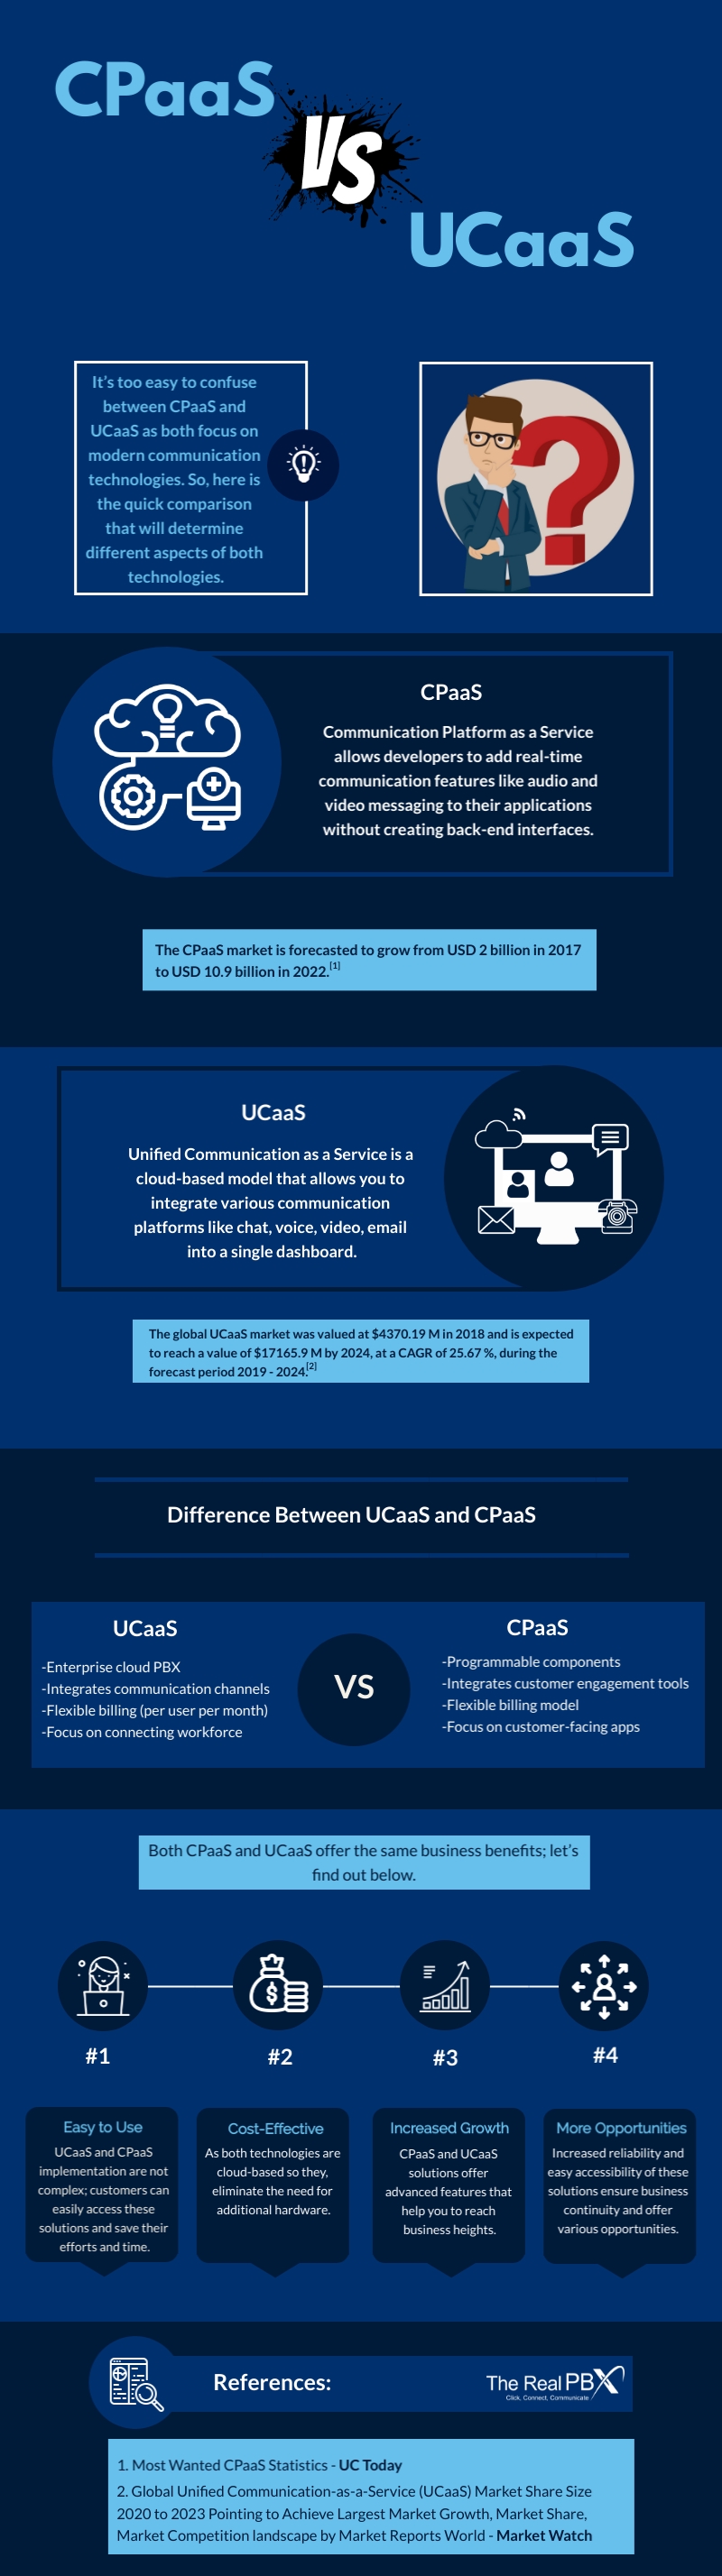 UCaaS vs CPaaS infographic